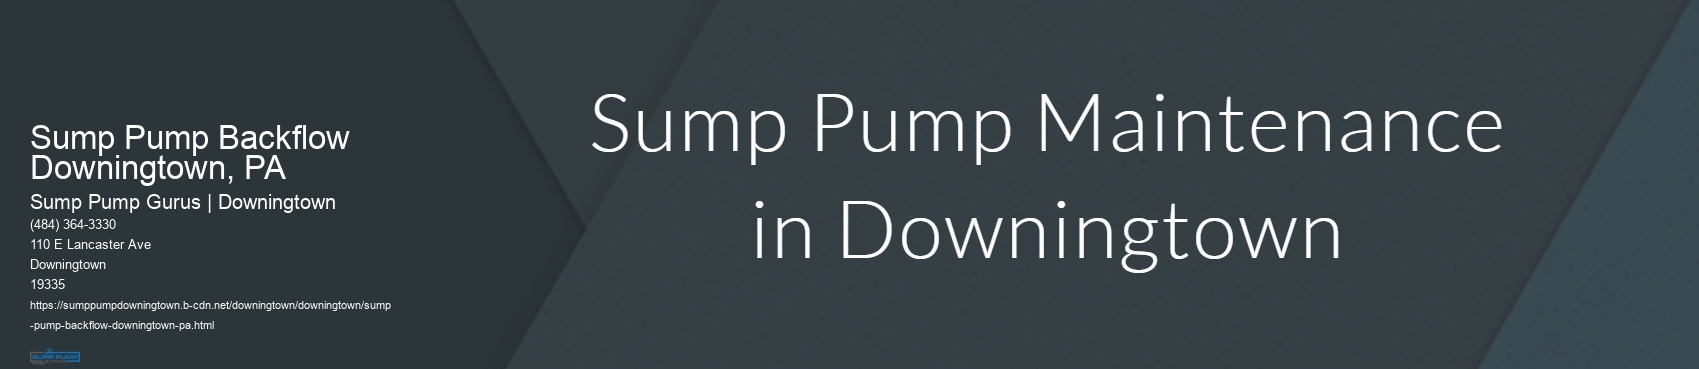 Sump Pump Backflow Downingtown, PA